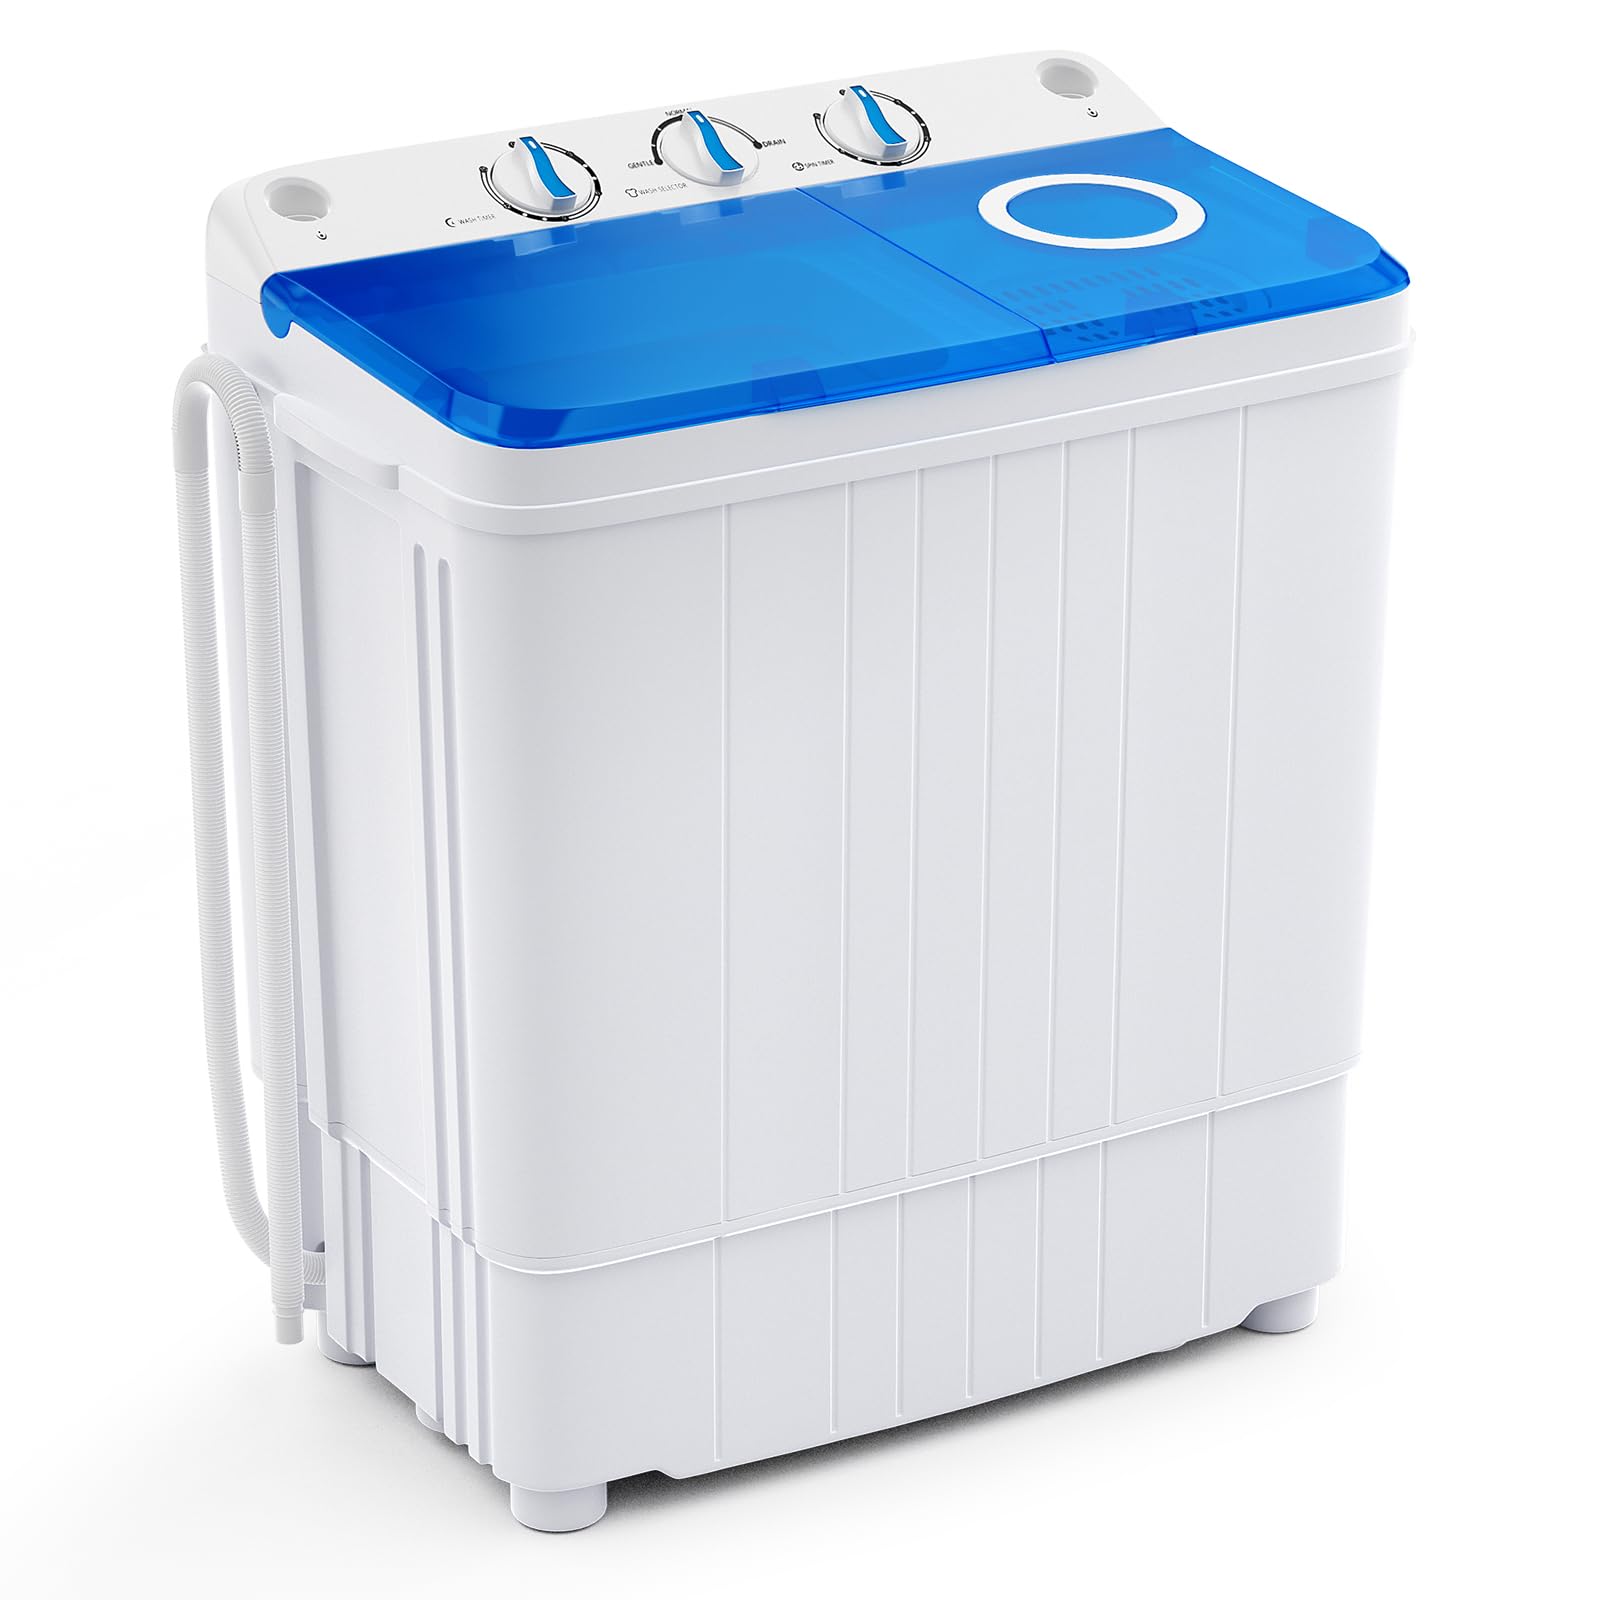 Giantex Portable Washing Machine, 17.6lbs Compact Portable Washer Twin Tub Combo with Pump Drain